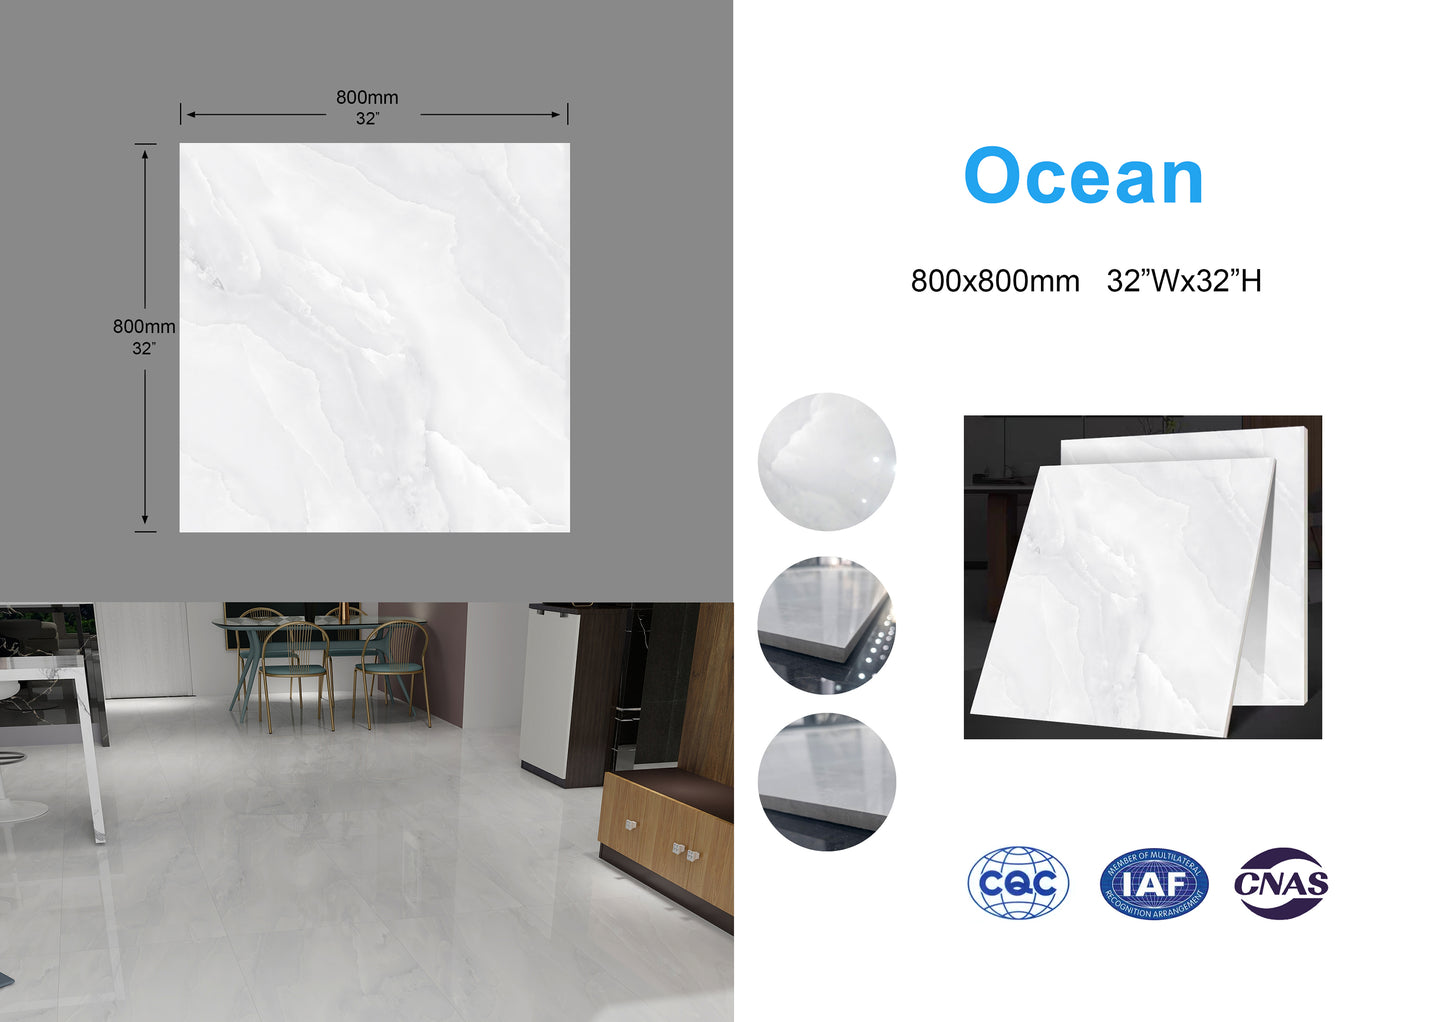 Ocean family Full Polished Glazed Tile light gray 32"x32" 3pcs/box 21.33sf/box $1.69/sf (15 days return/exchange) Bulk Deal 1000sf+ $1.59/SF(No return/no exchange)